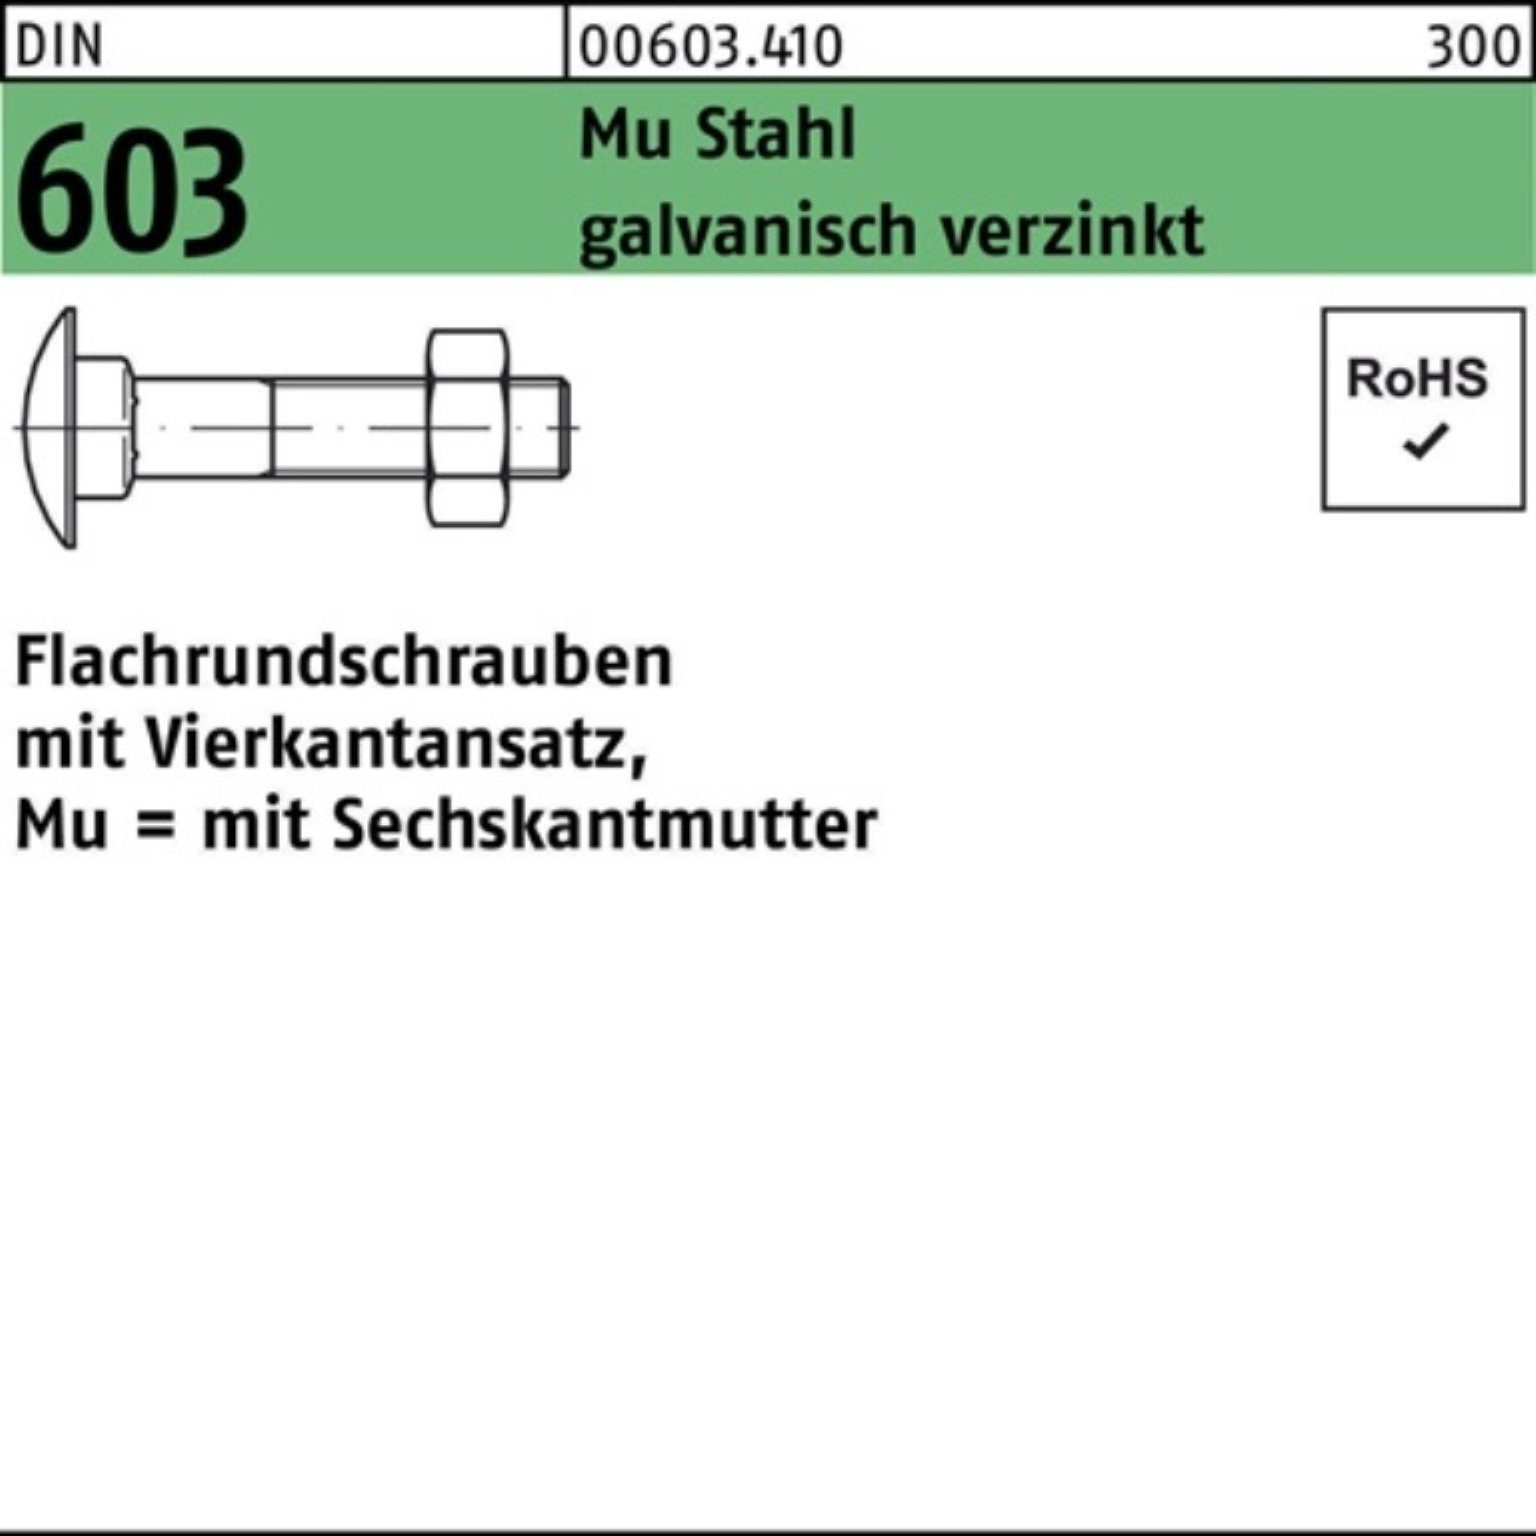 Reyher 100er Pack Vierkantansatz/6-ktmutter DIN Flachrundschraube M12x300 Schraube 603